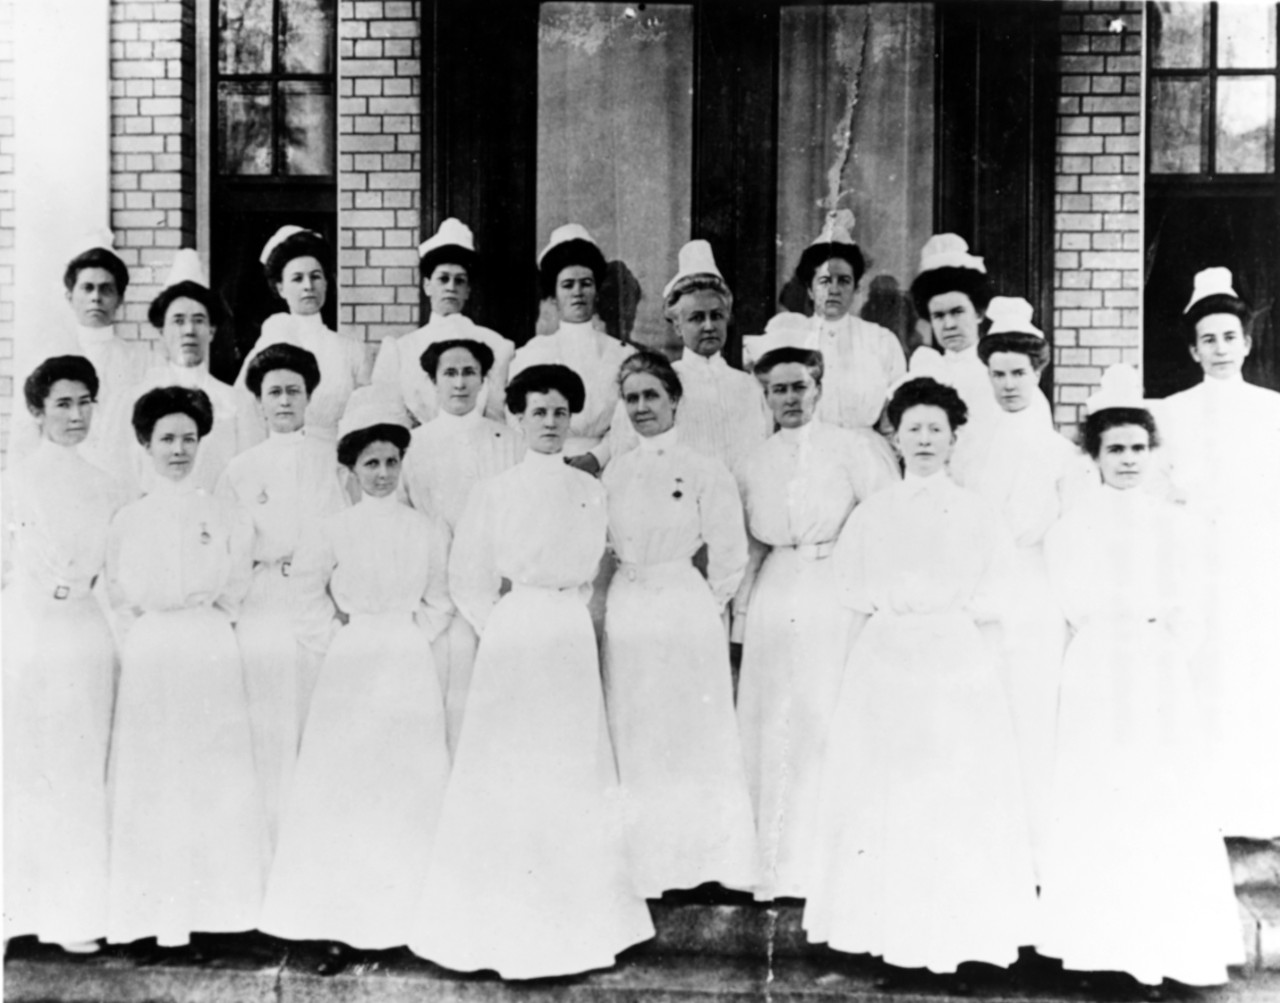 The Sacred Twenty pose in white nursing uniform